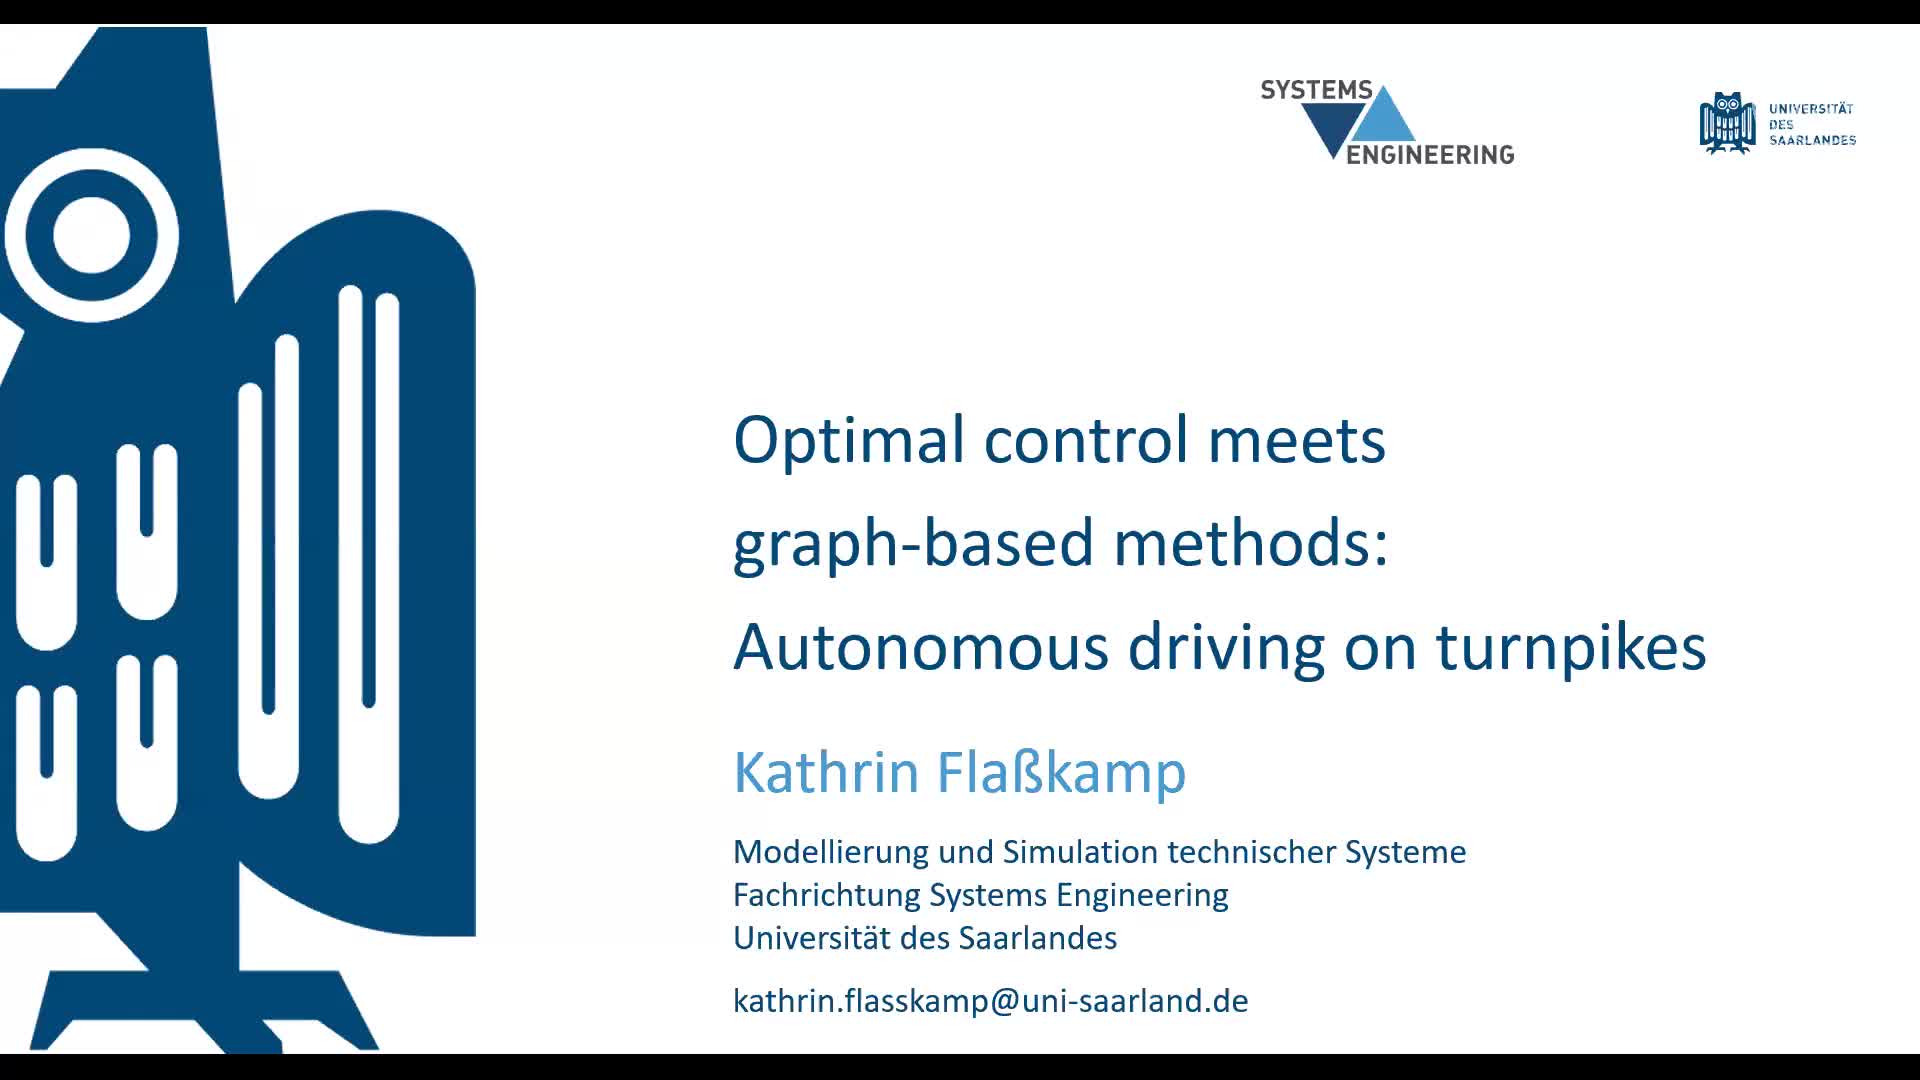 Optimal control meets graph-based methods: Autonomous driving on turnpikes (K. Flaßkamp) preview image